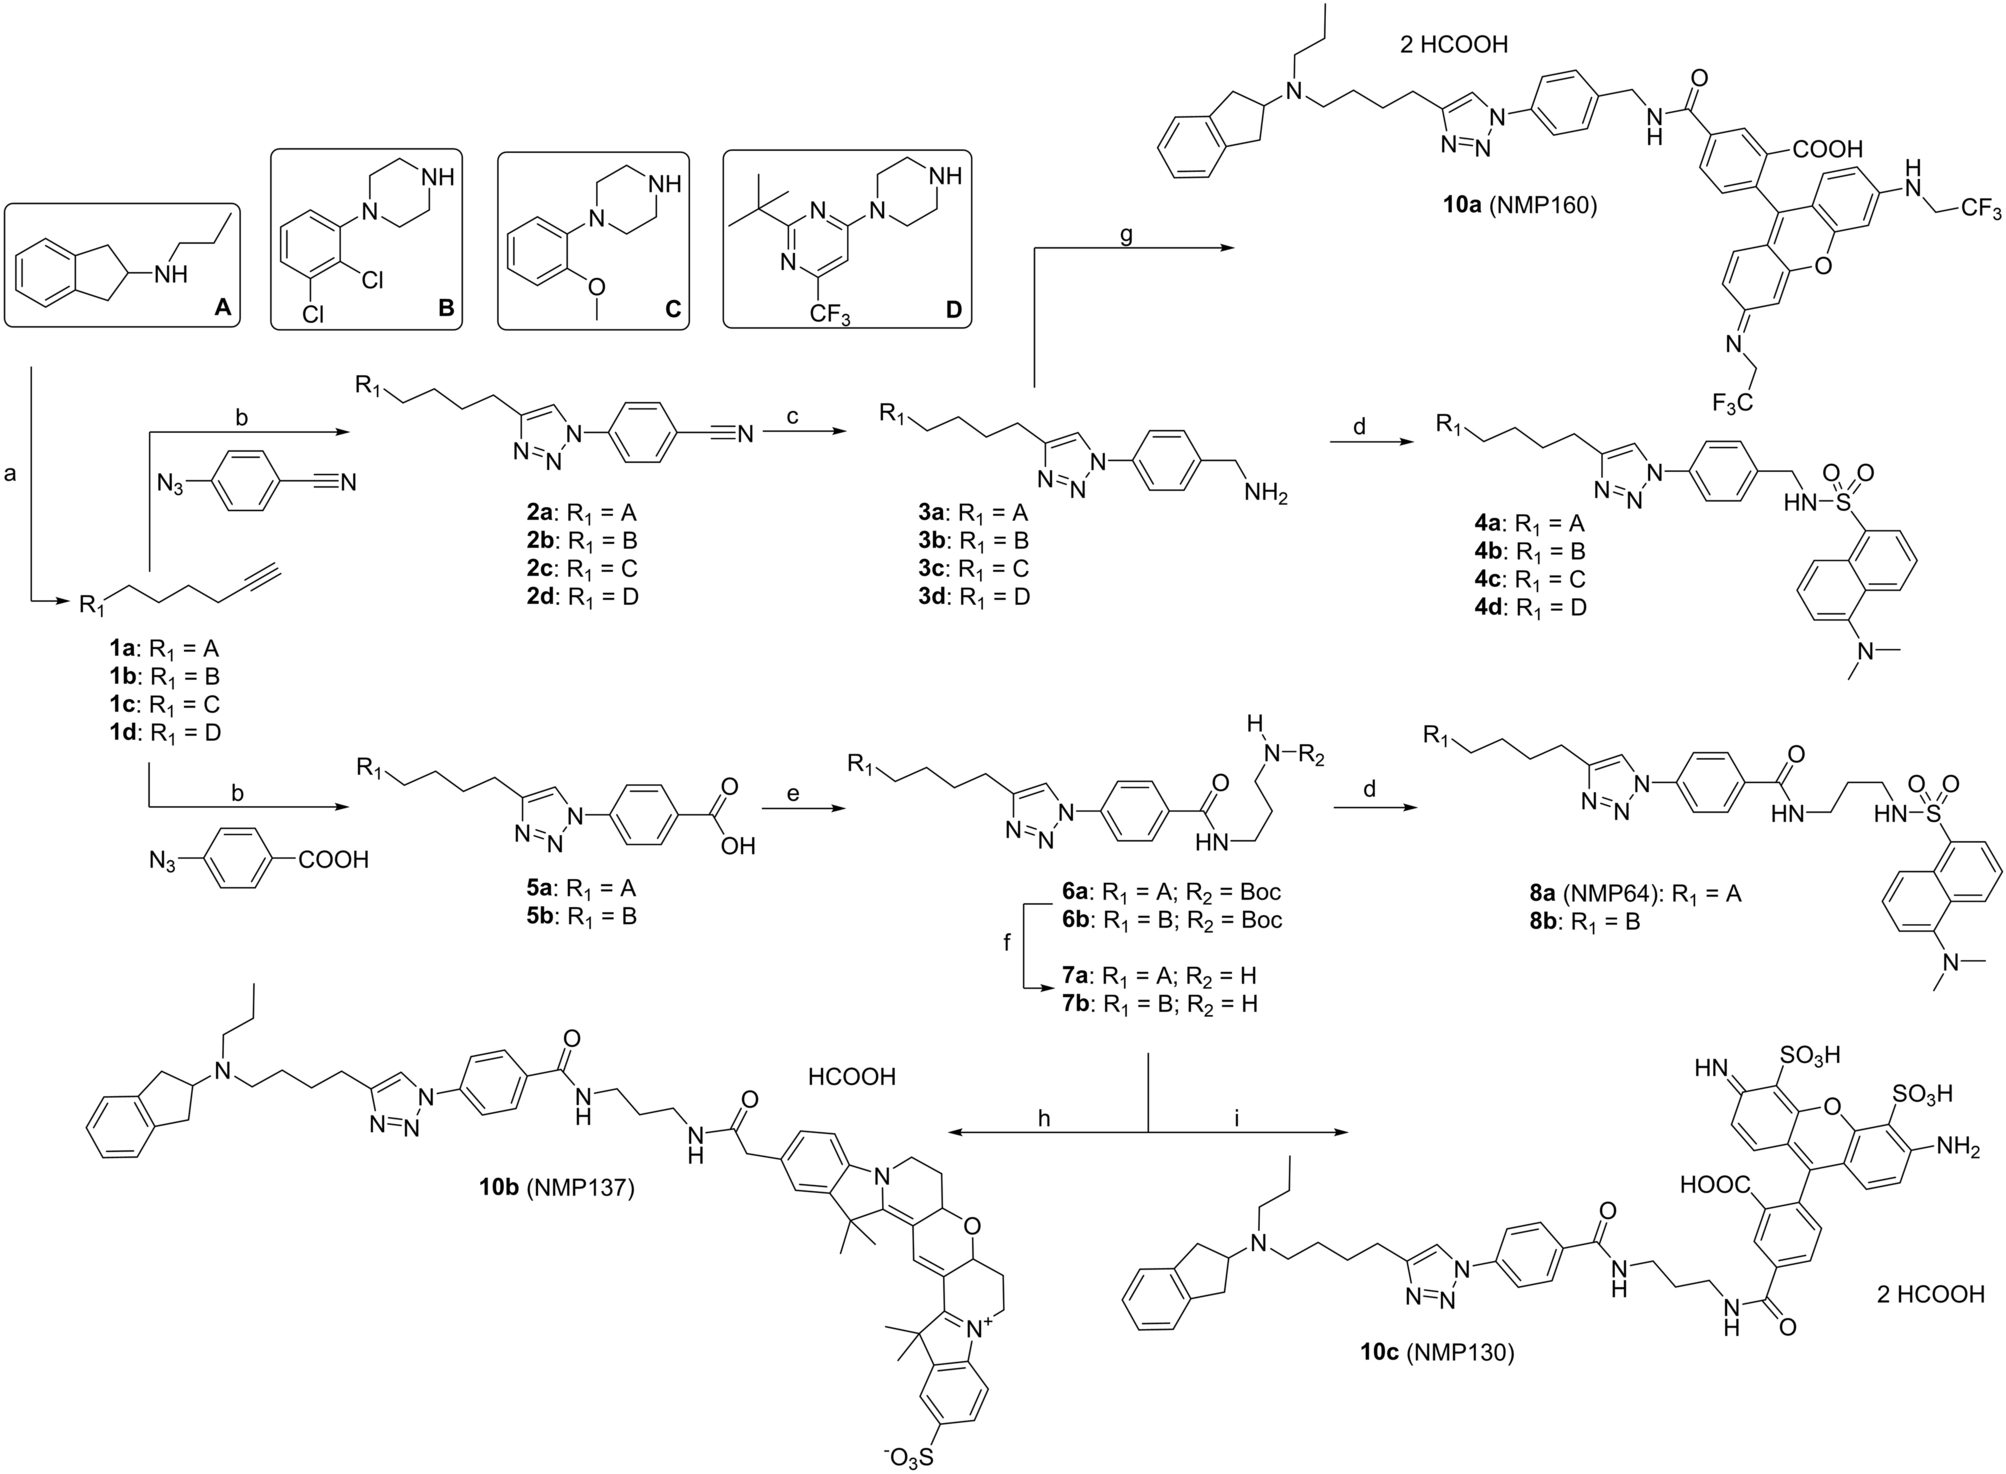 Full article: Novel multi-target ligands of dopamine and serotonin